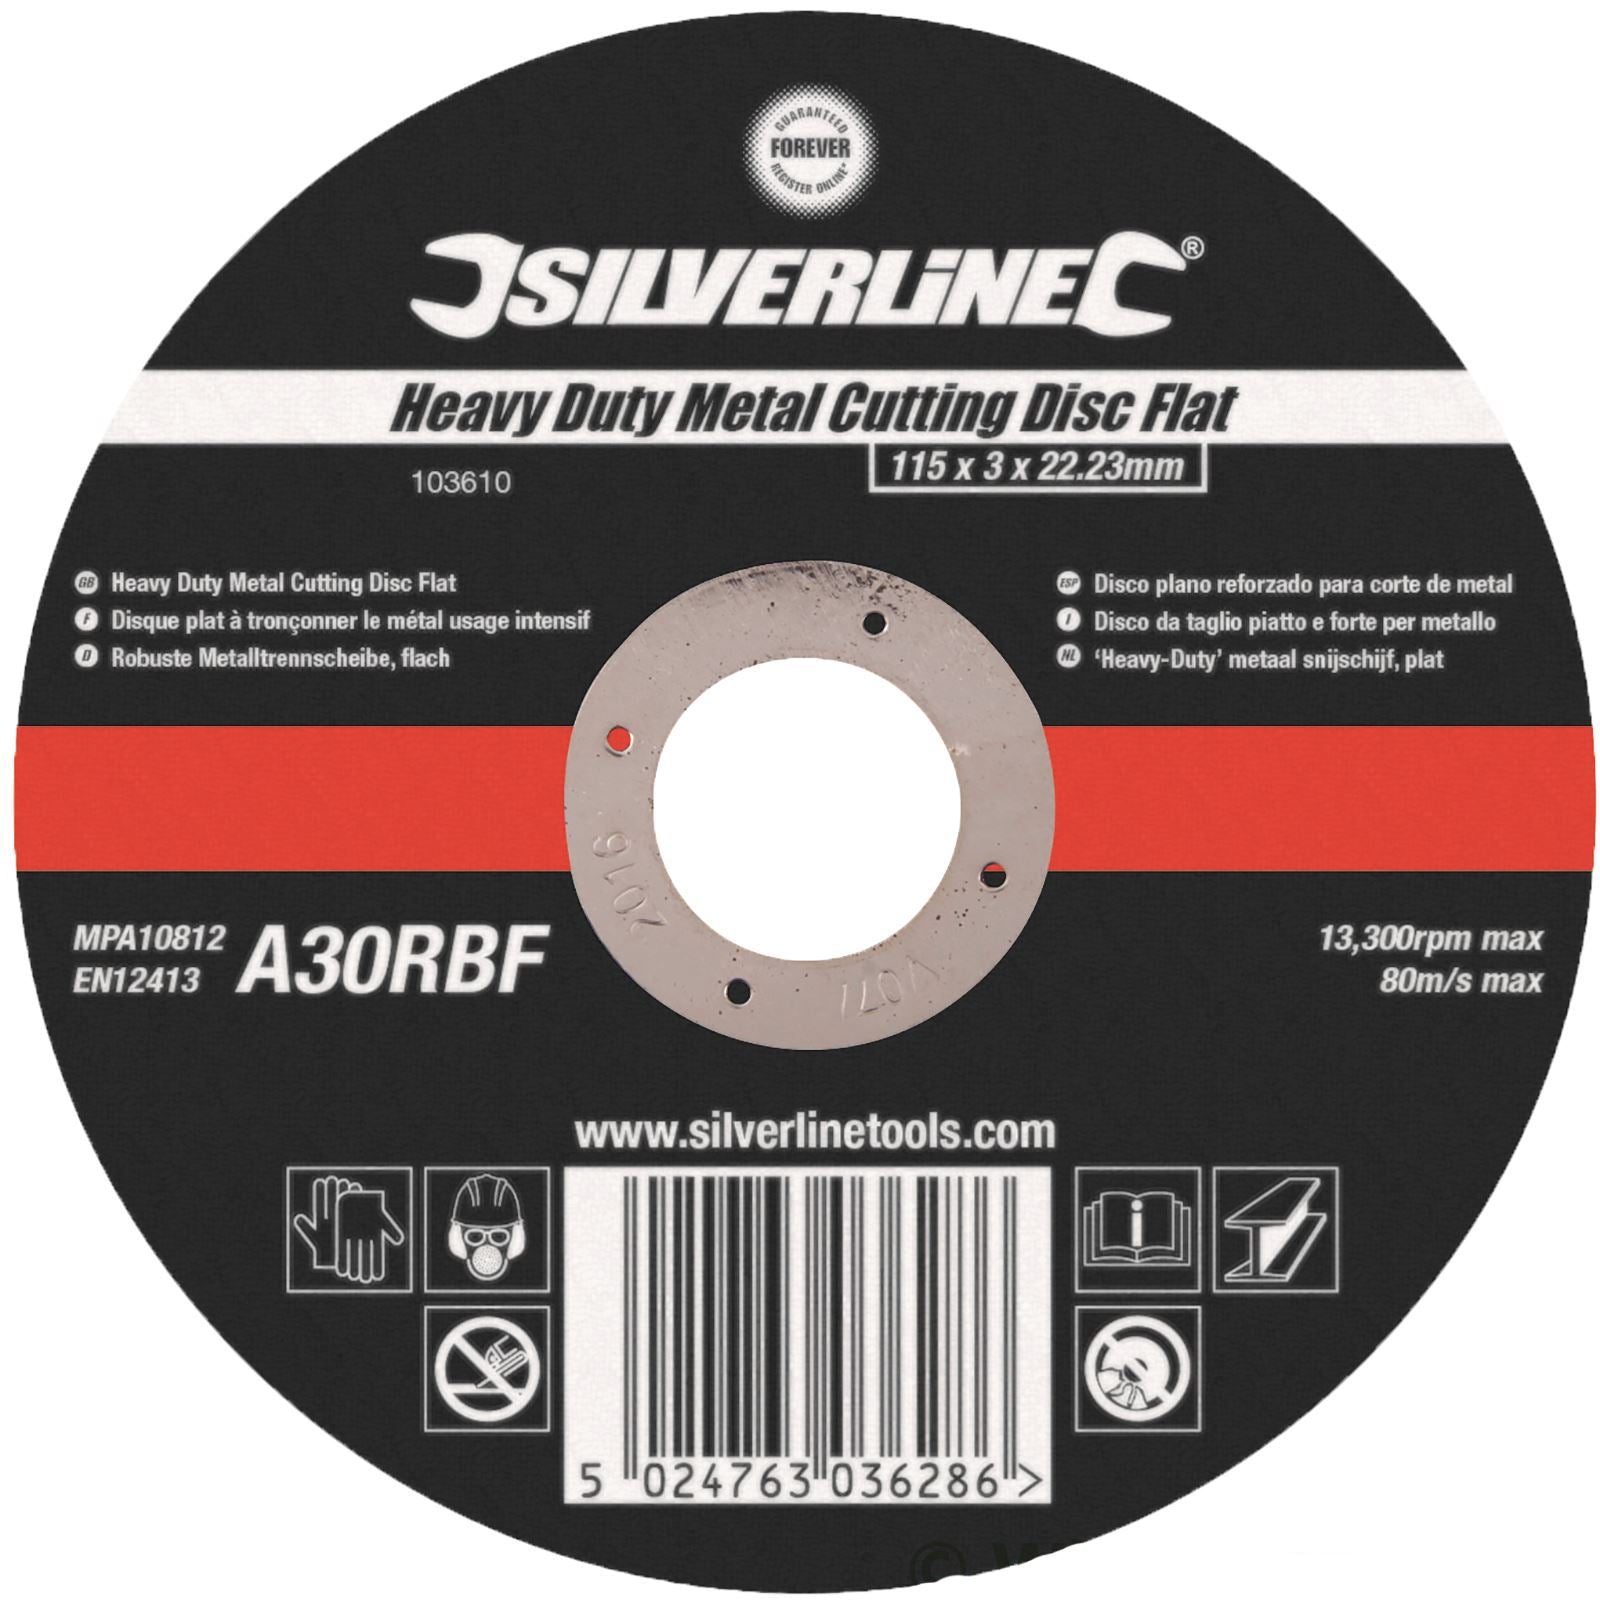 Silverline Heavy Duty Flat Metal Cutting Disc 115 x 3 x 22.23mm